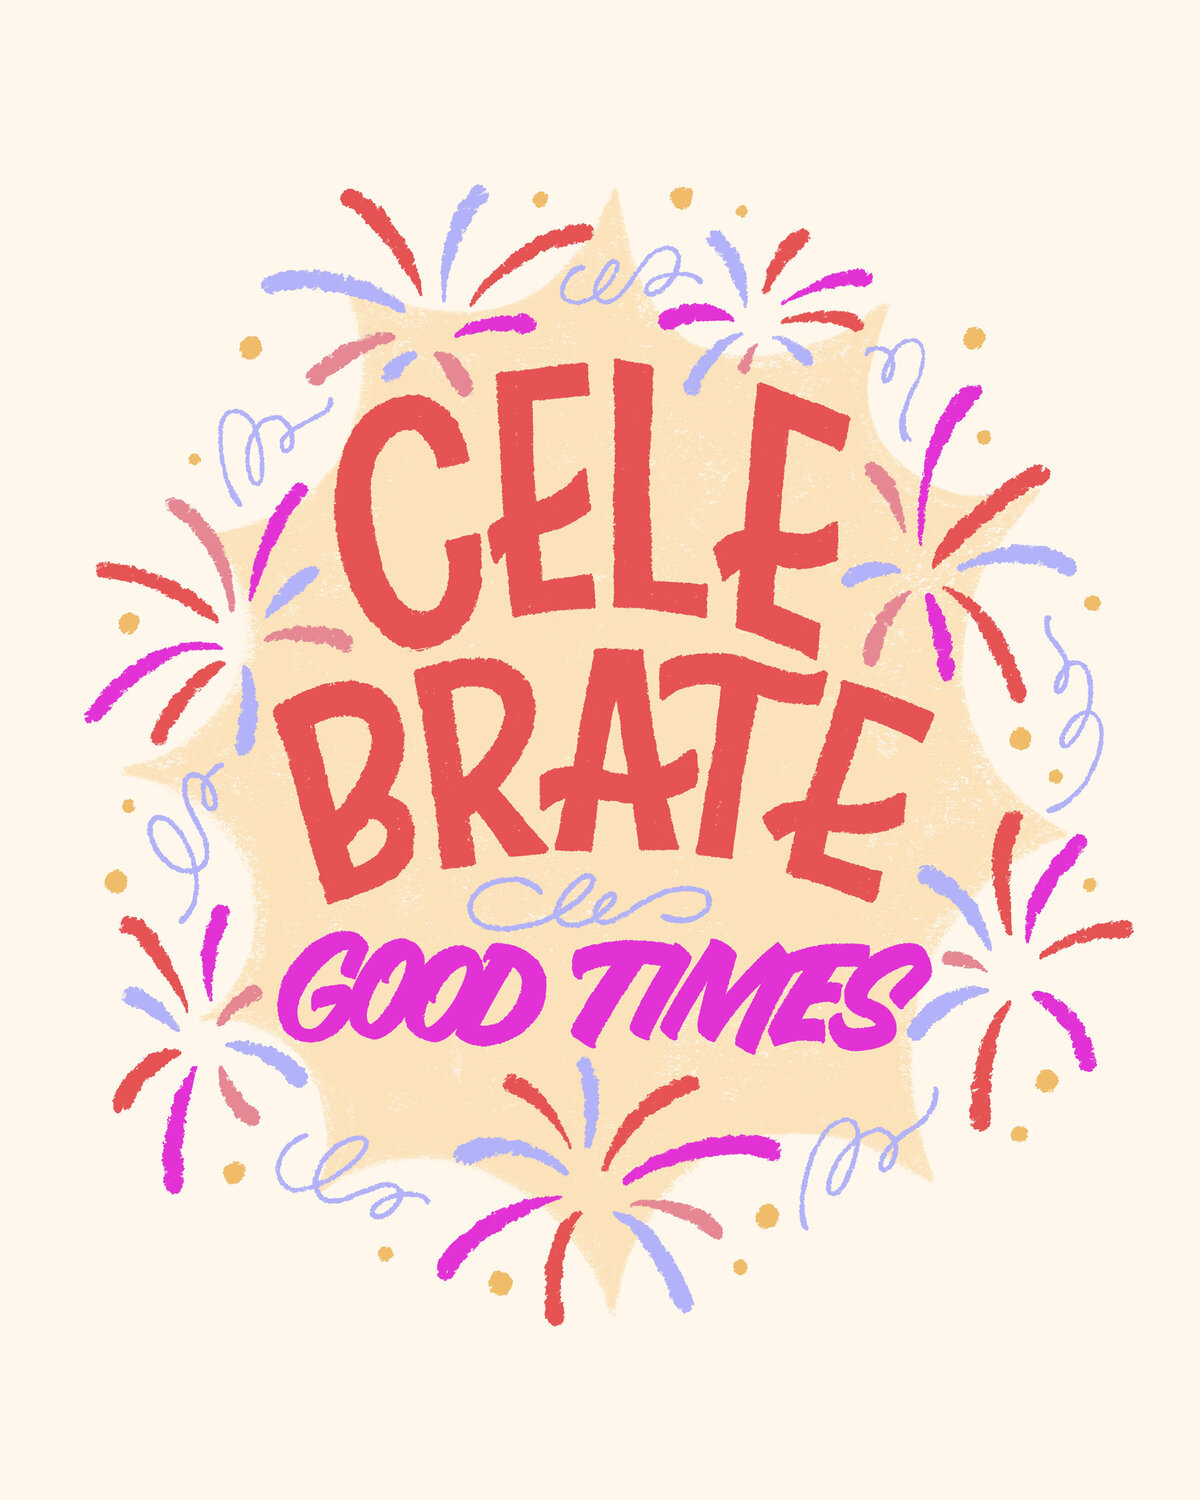 Celebrate Good Times